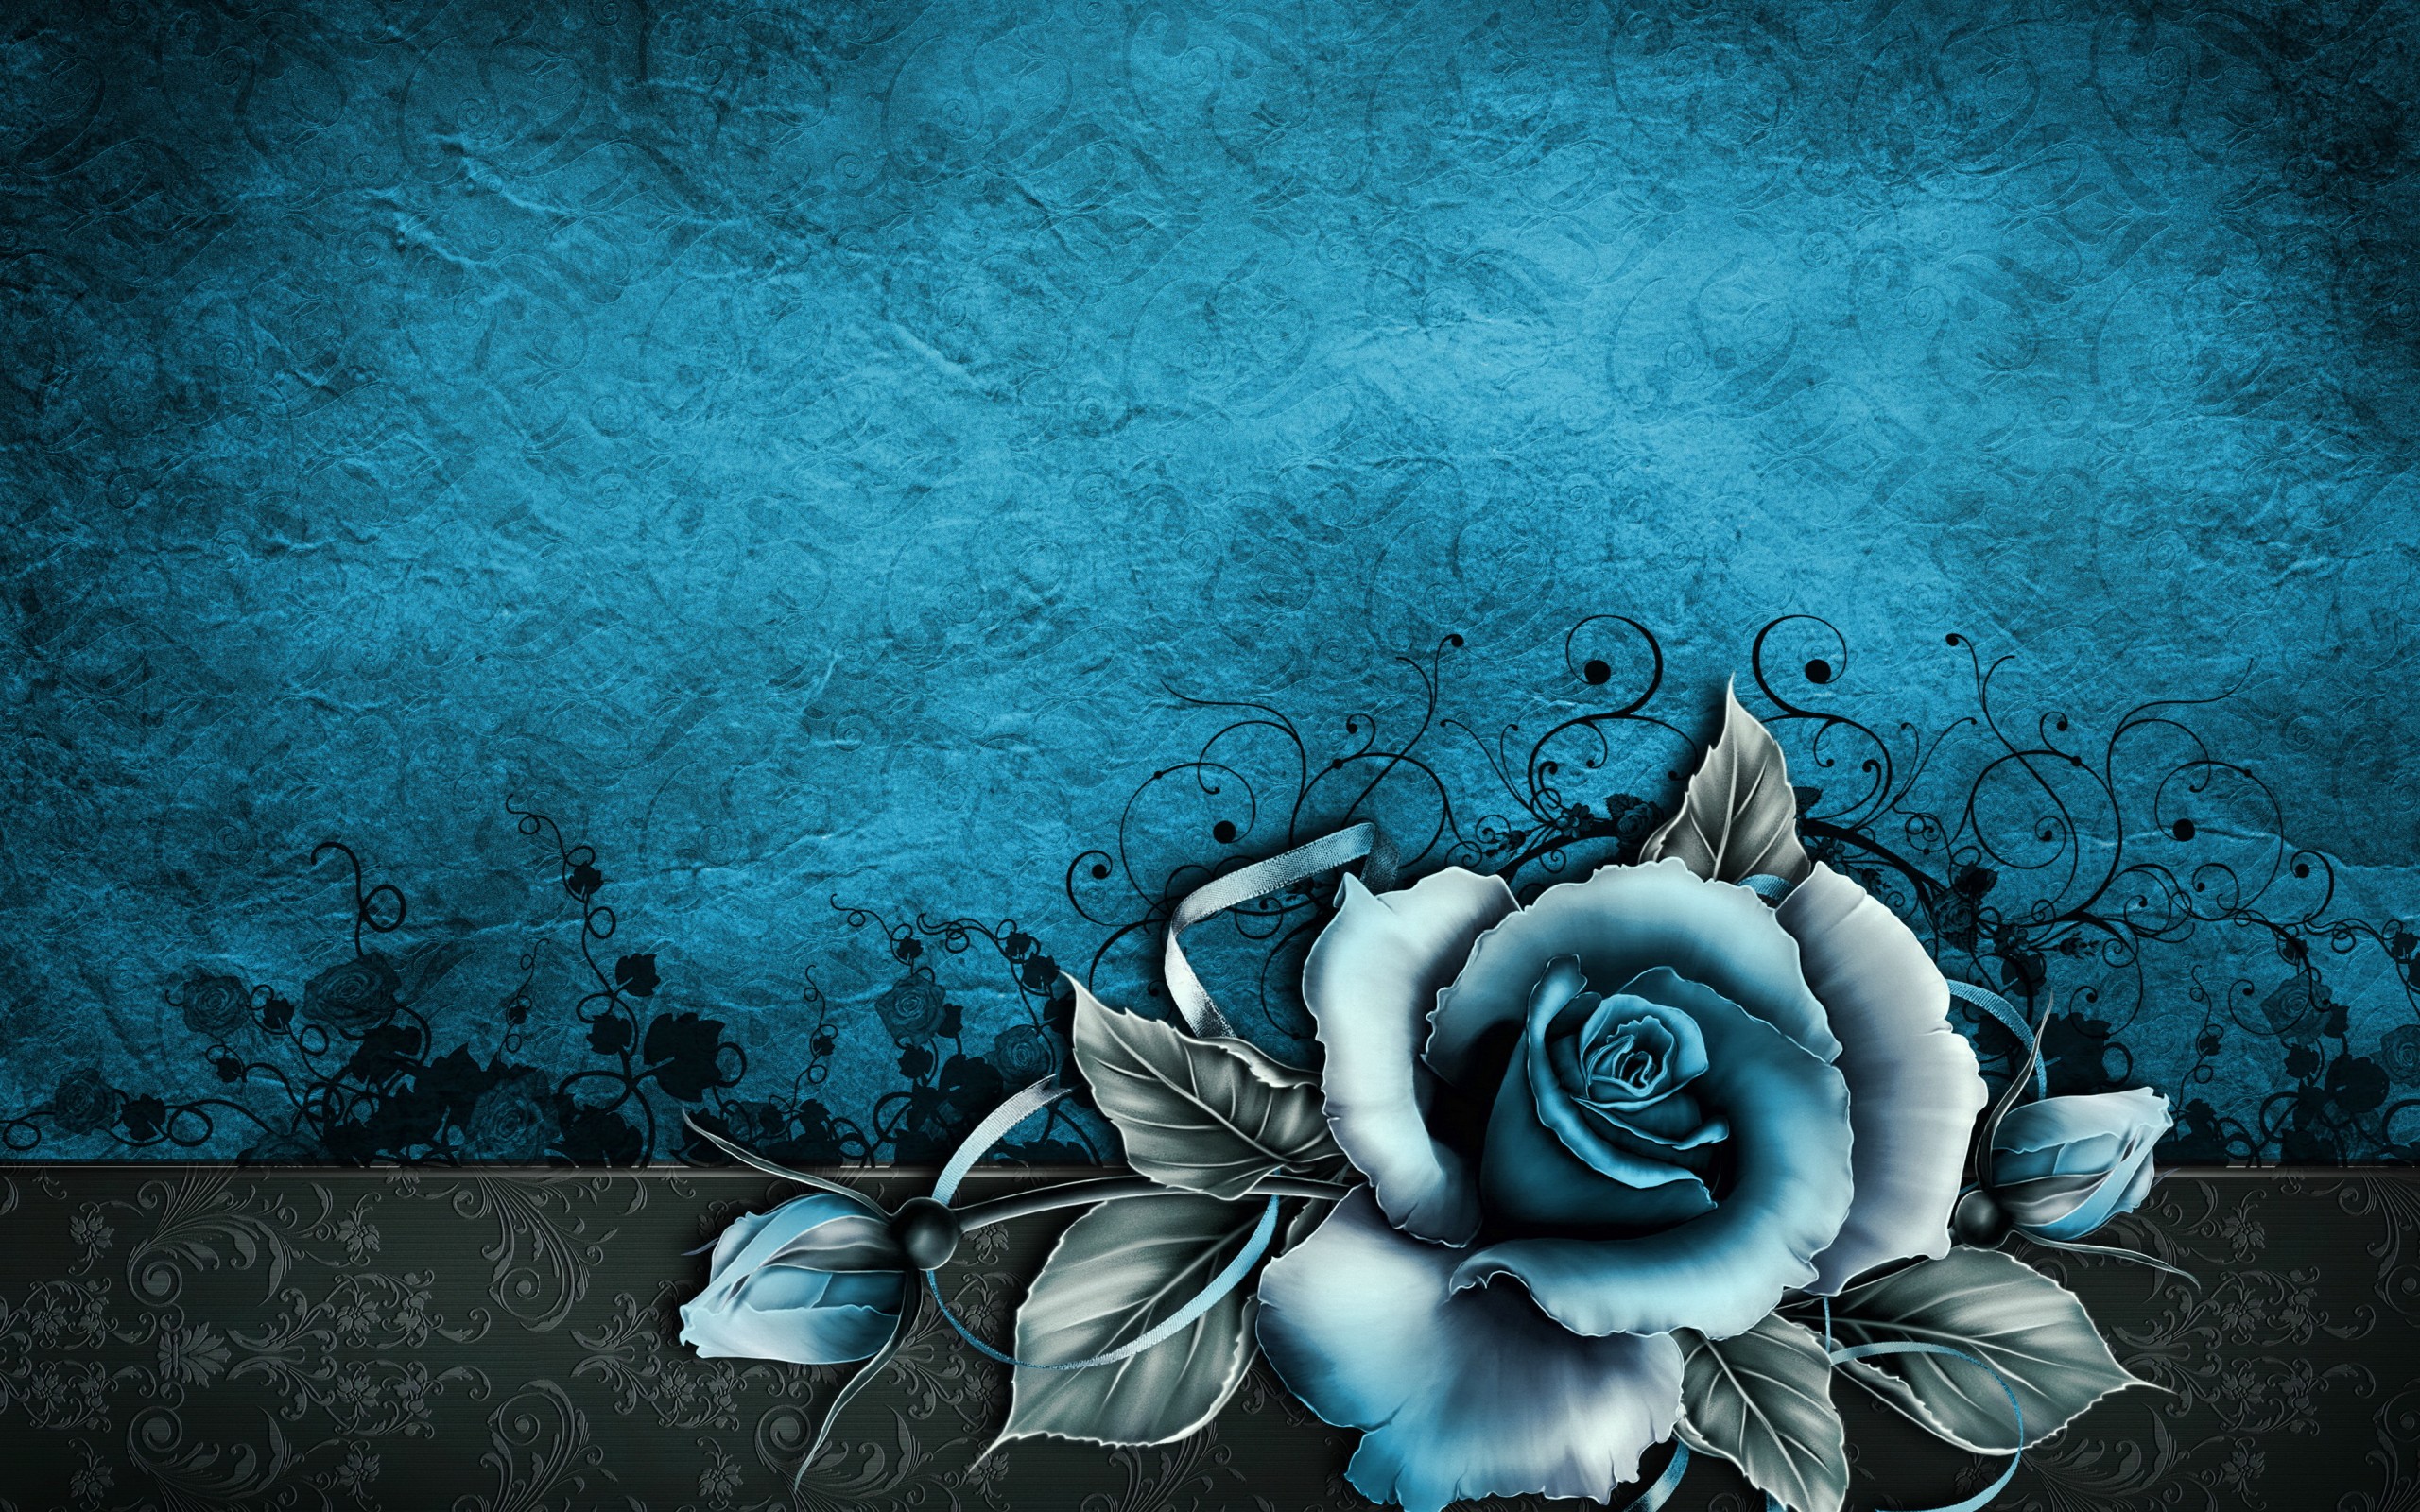 Artistic Rose HD Wallpaper | Background Image